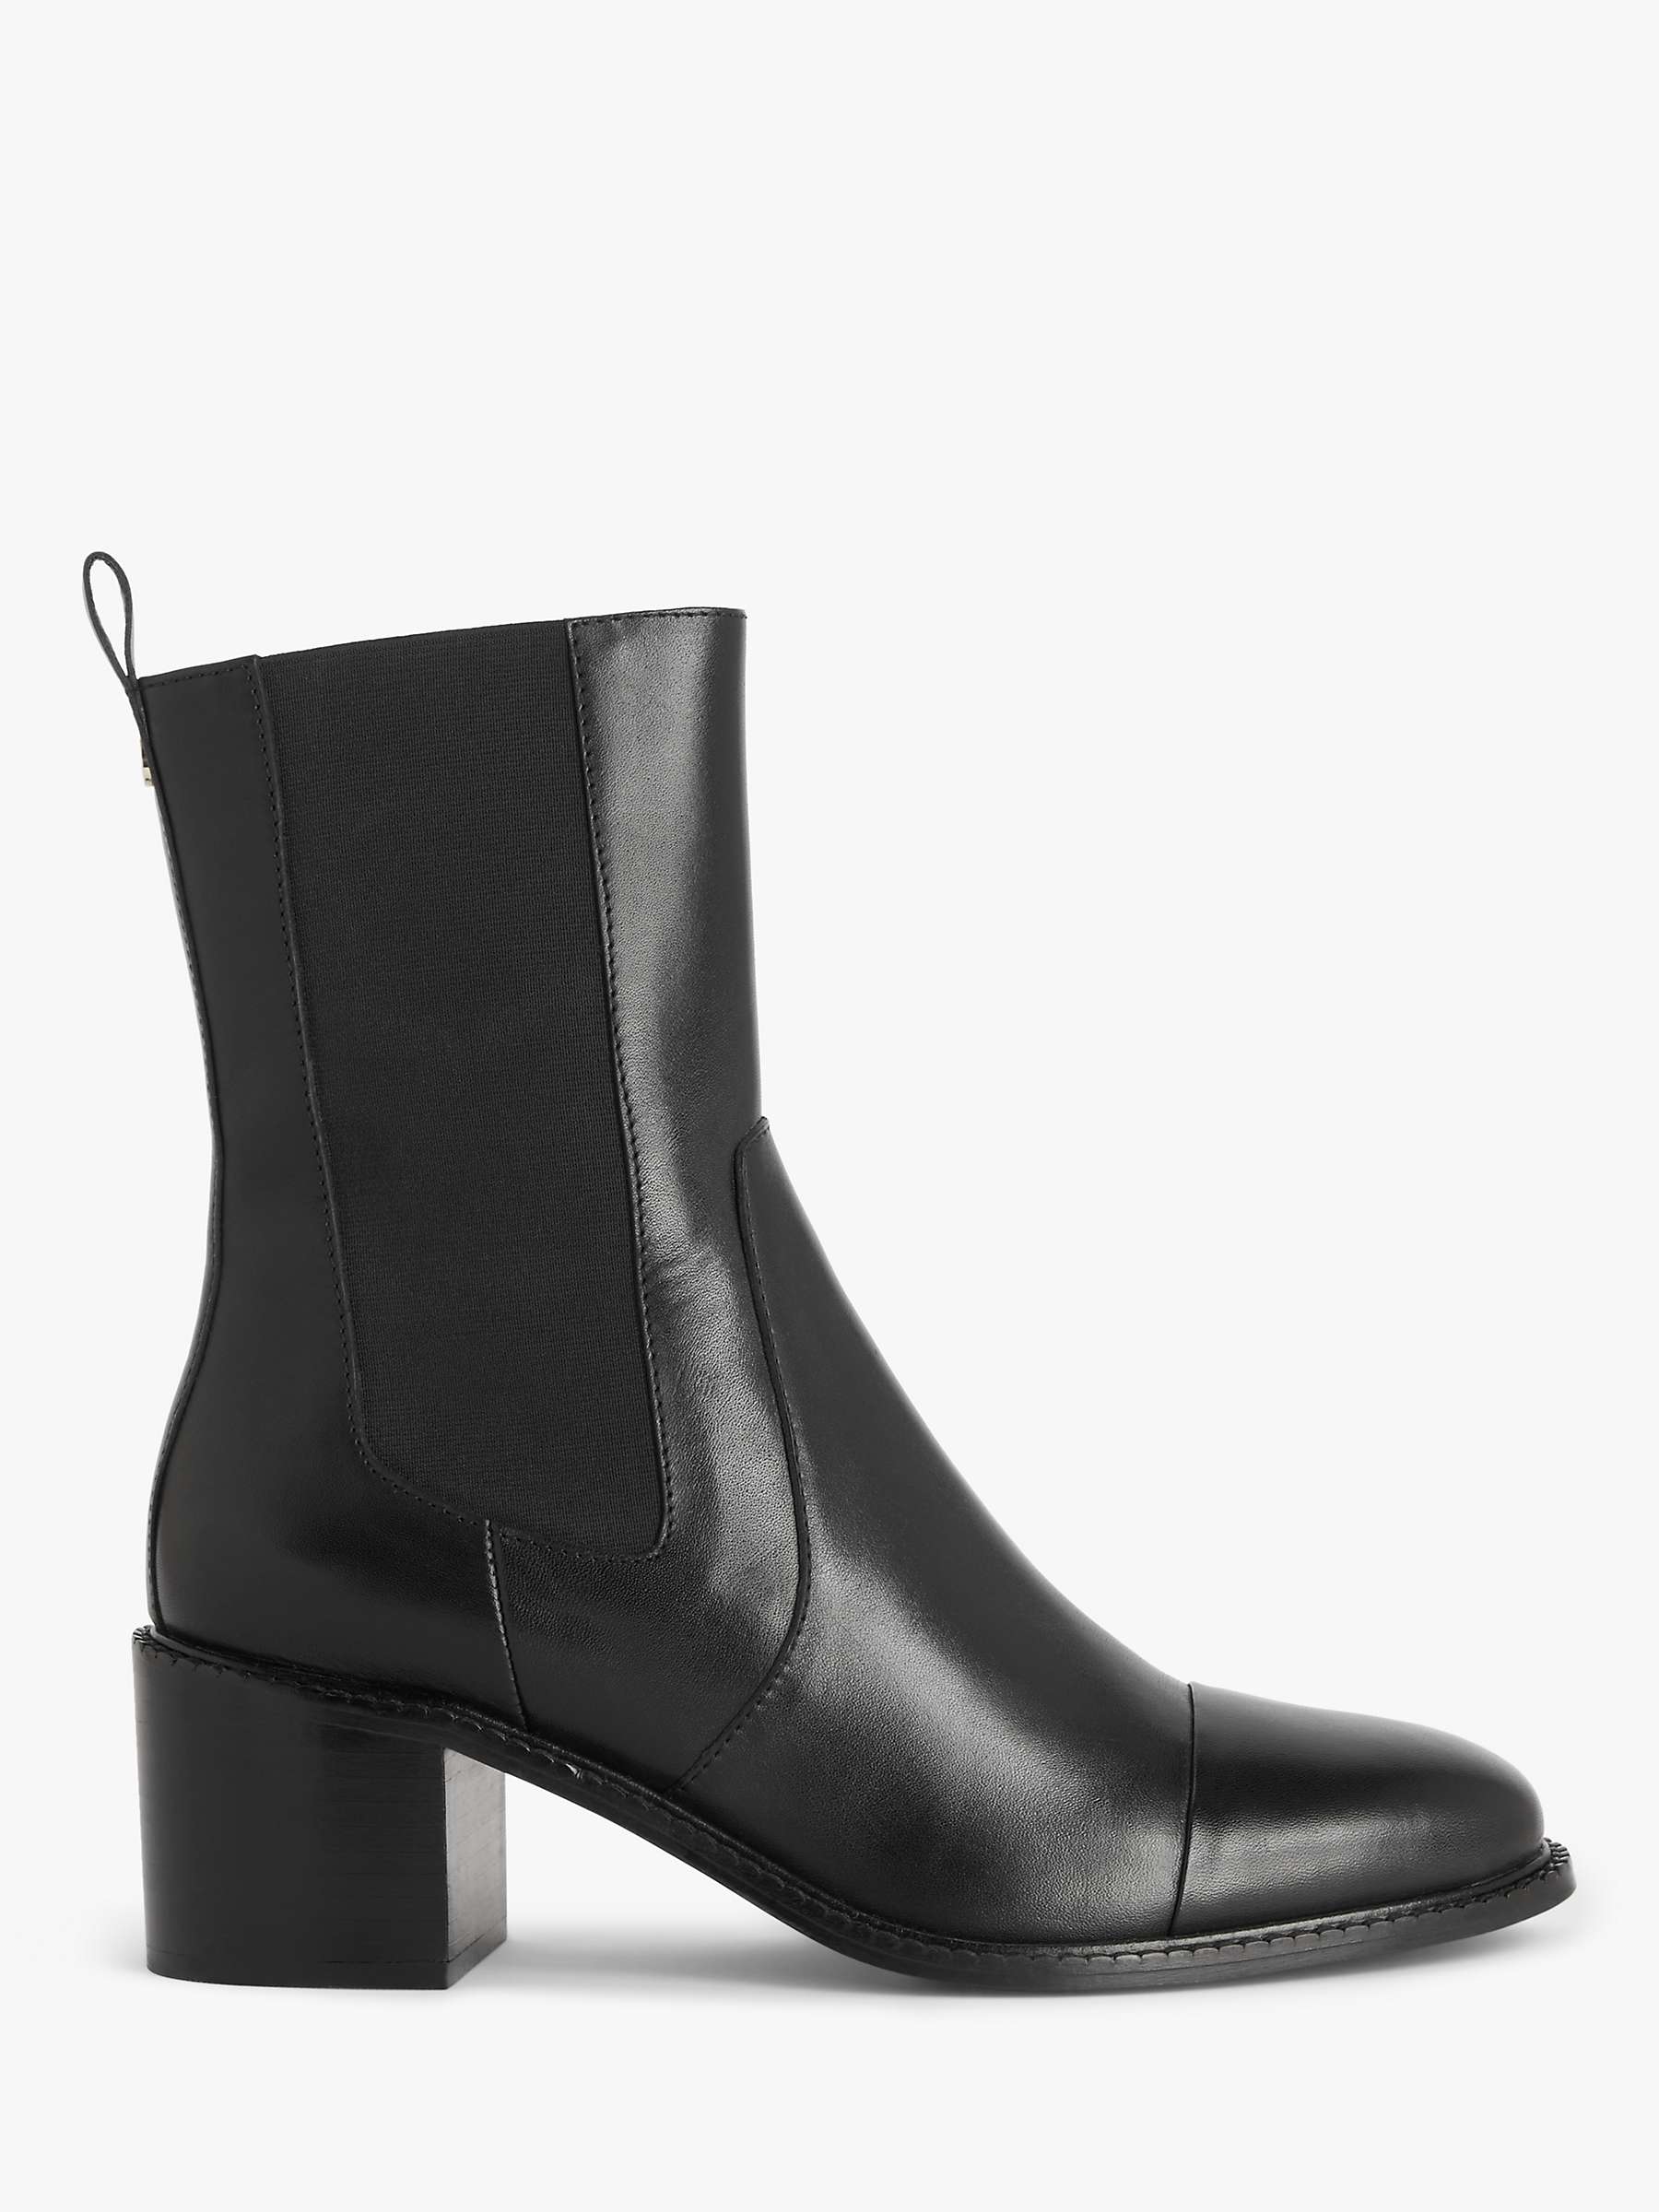 Buy John Lewis Palomino Leather Toe Cap Heeled Chelsea Boots Online at johnlewis.com